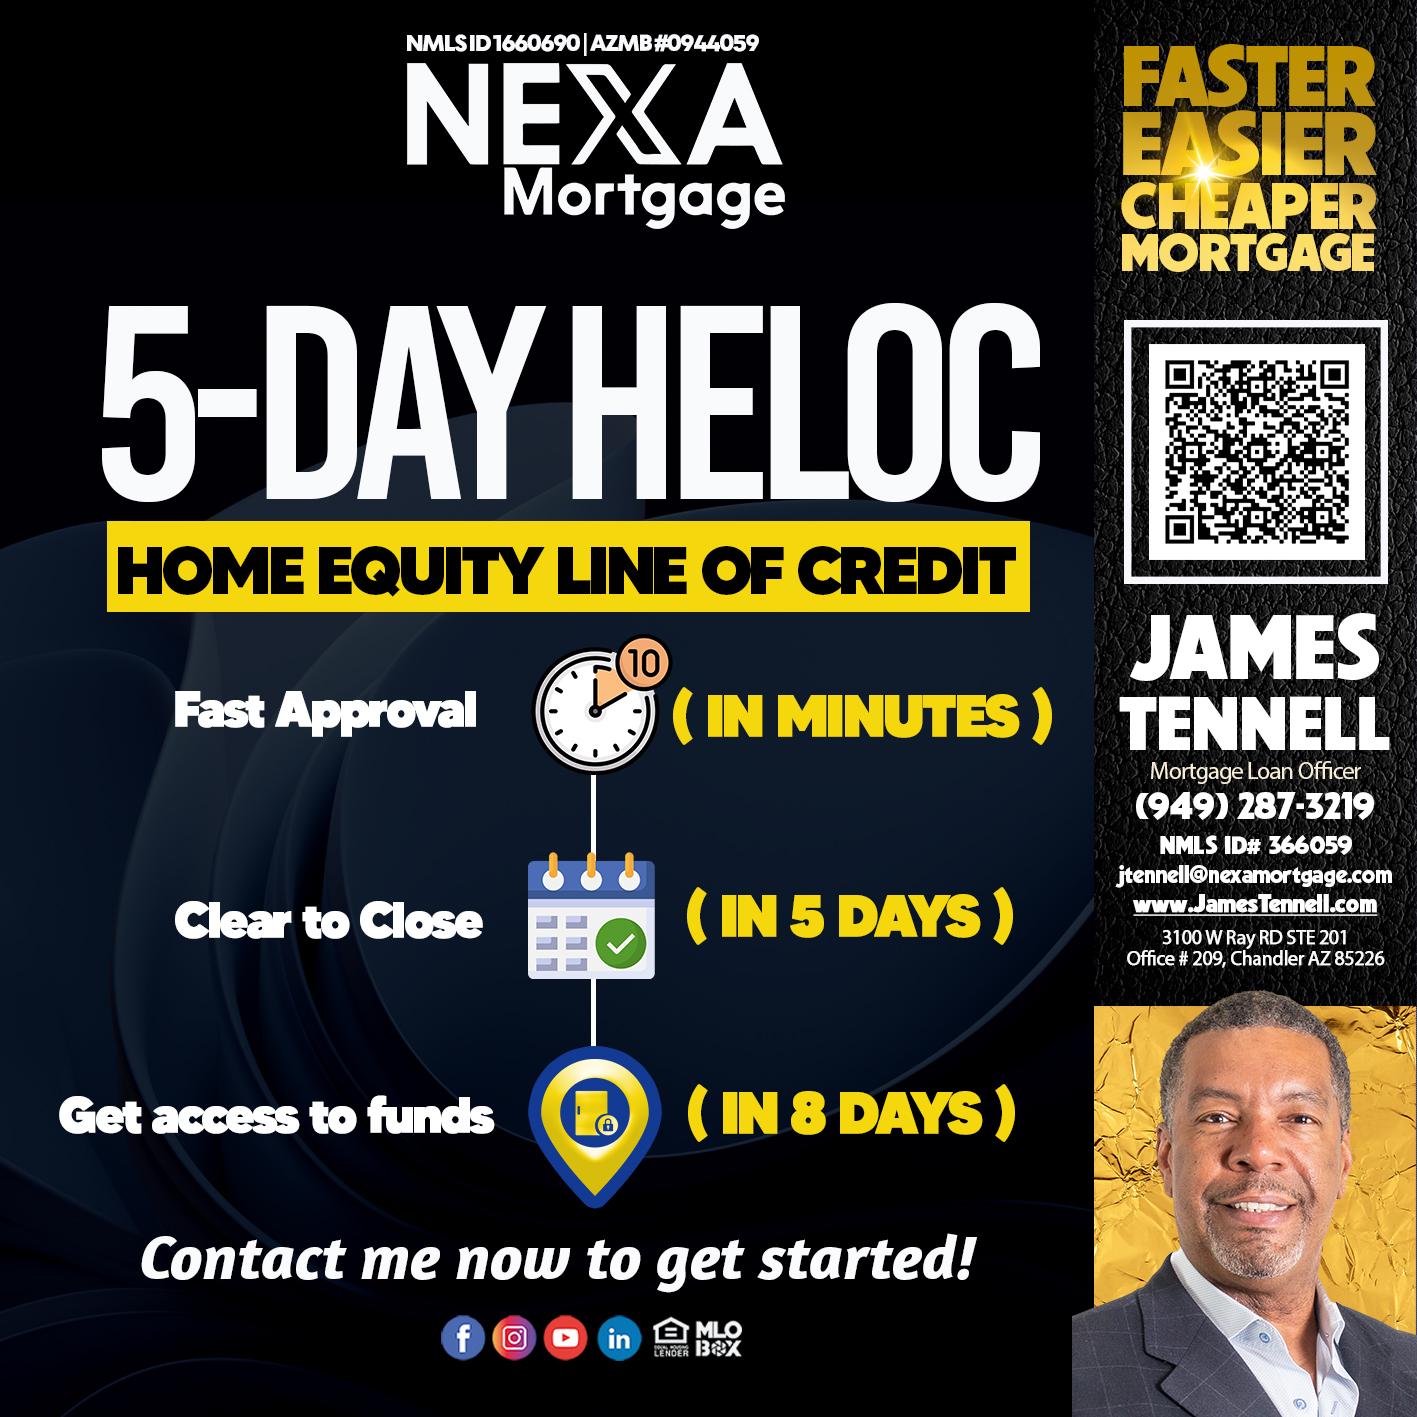 5 DAY HELOC - James Tennell -Mortgage Loan Originator